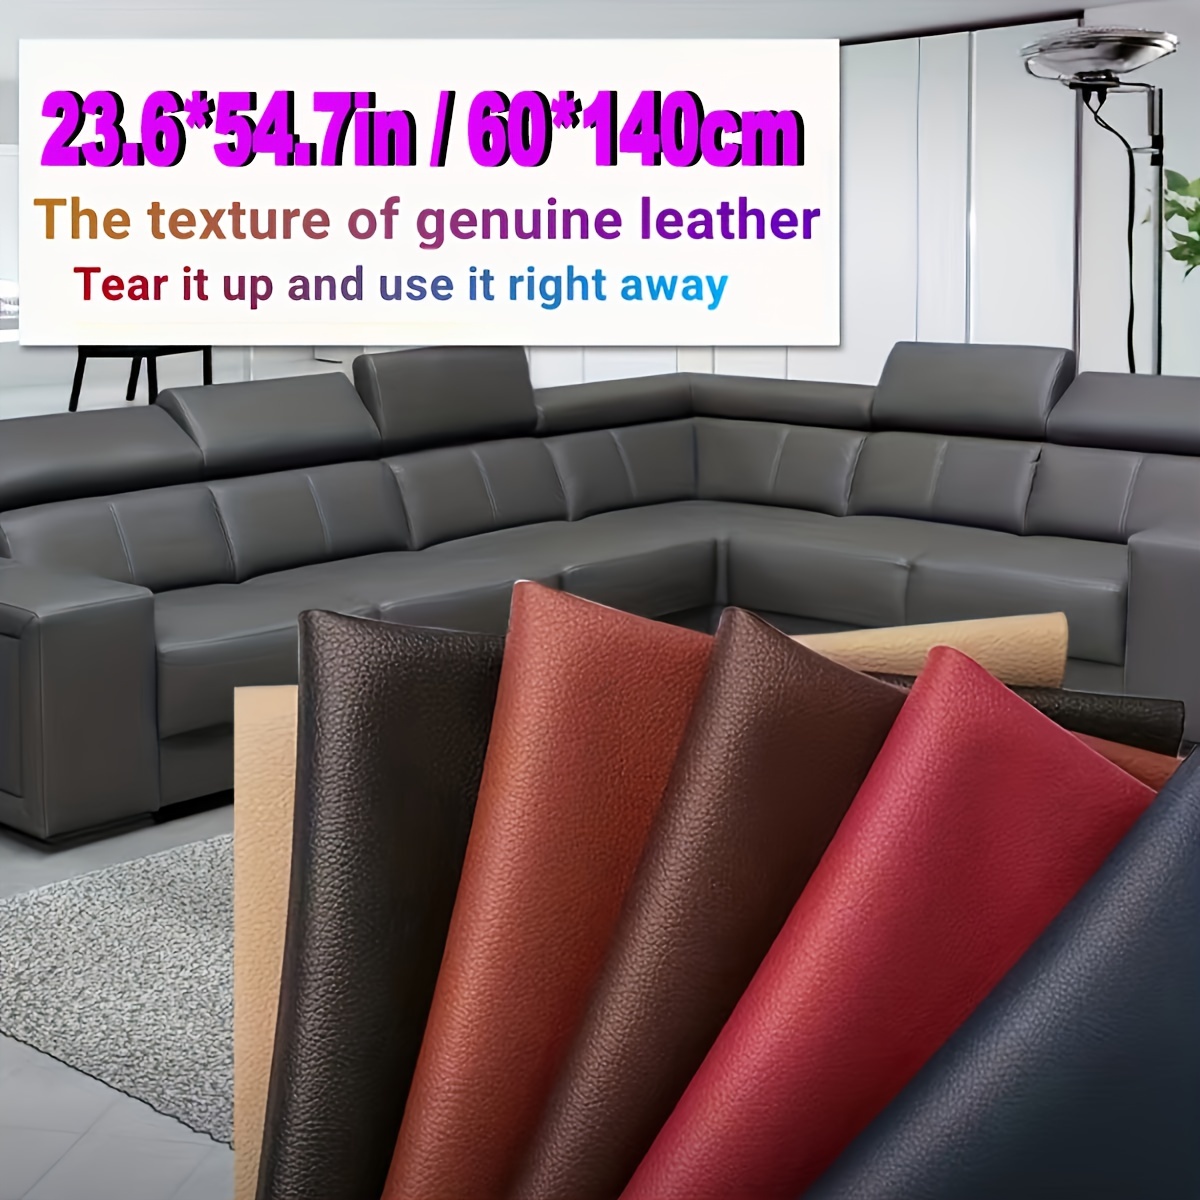 High Quality Leather Repair Patch Self adhesive Sofa Car - Temu